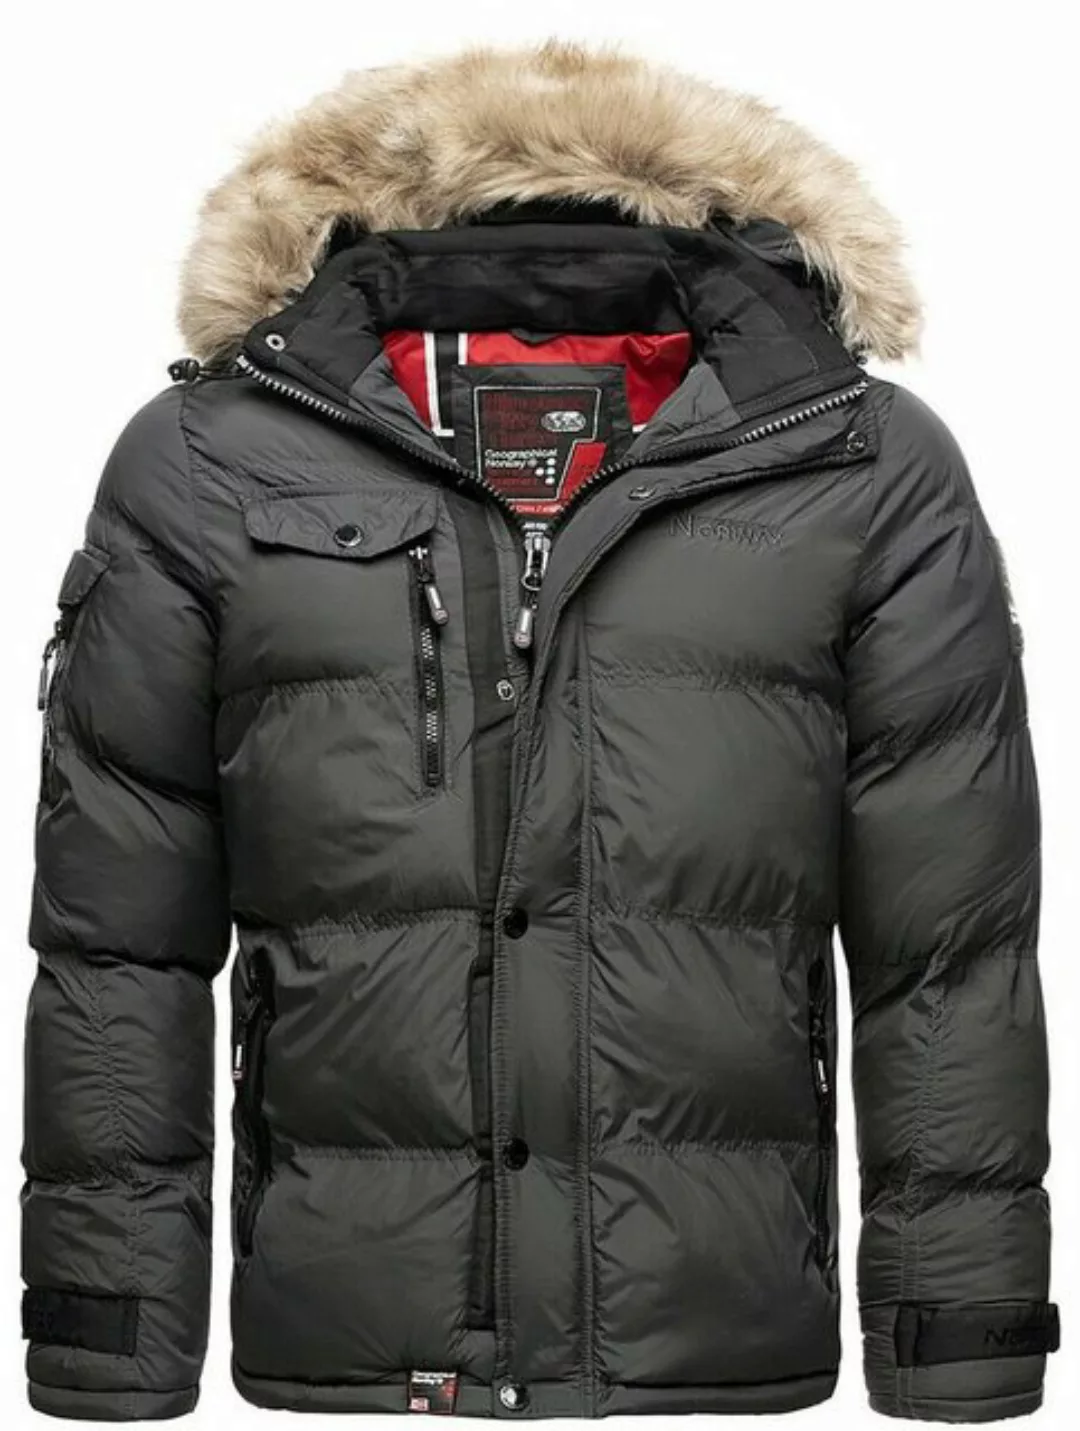 Geographical Norway Steppjacke Winter Jacke Steppjacke Outdoor Parka Warme günstig online kaufen